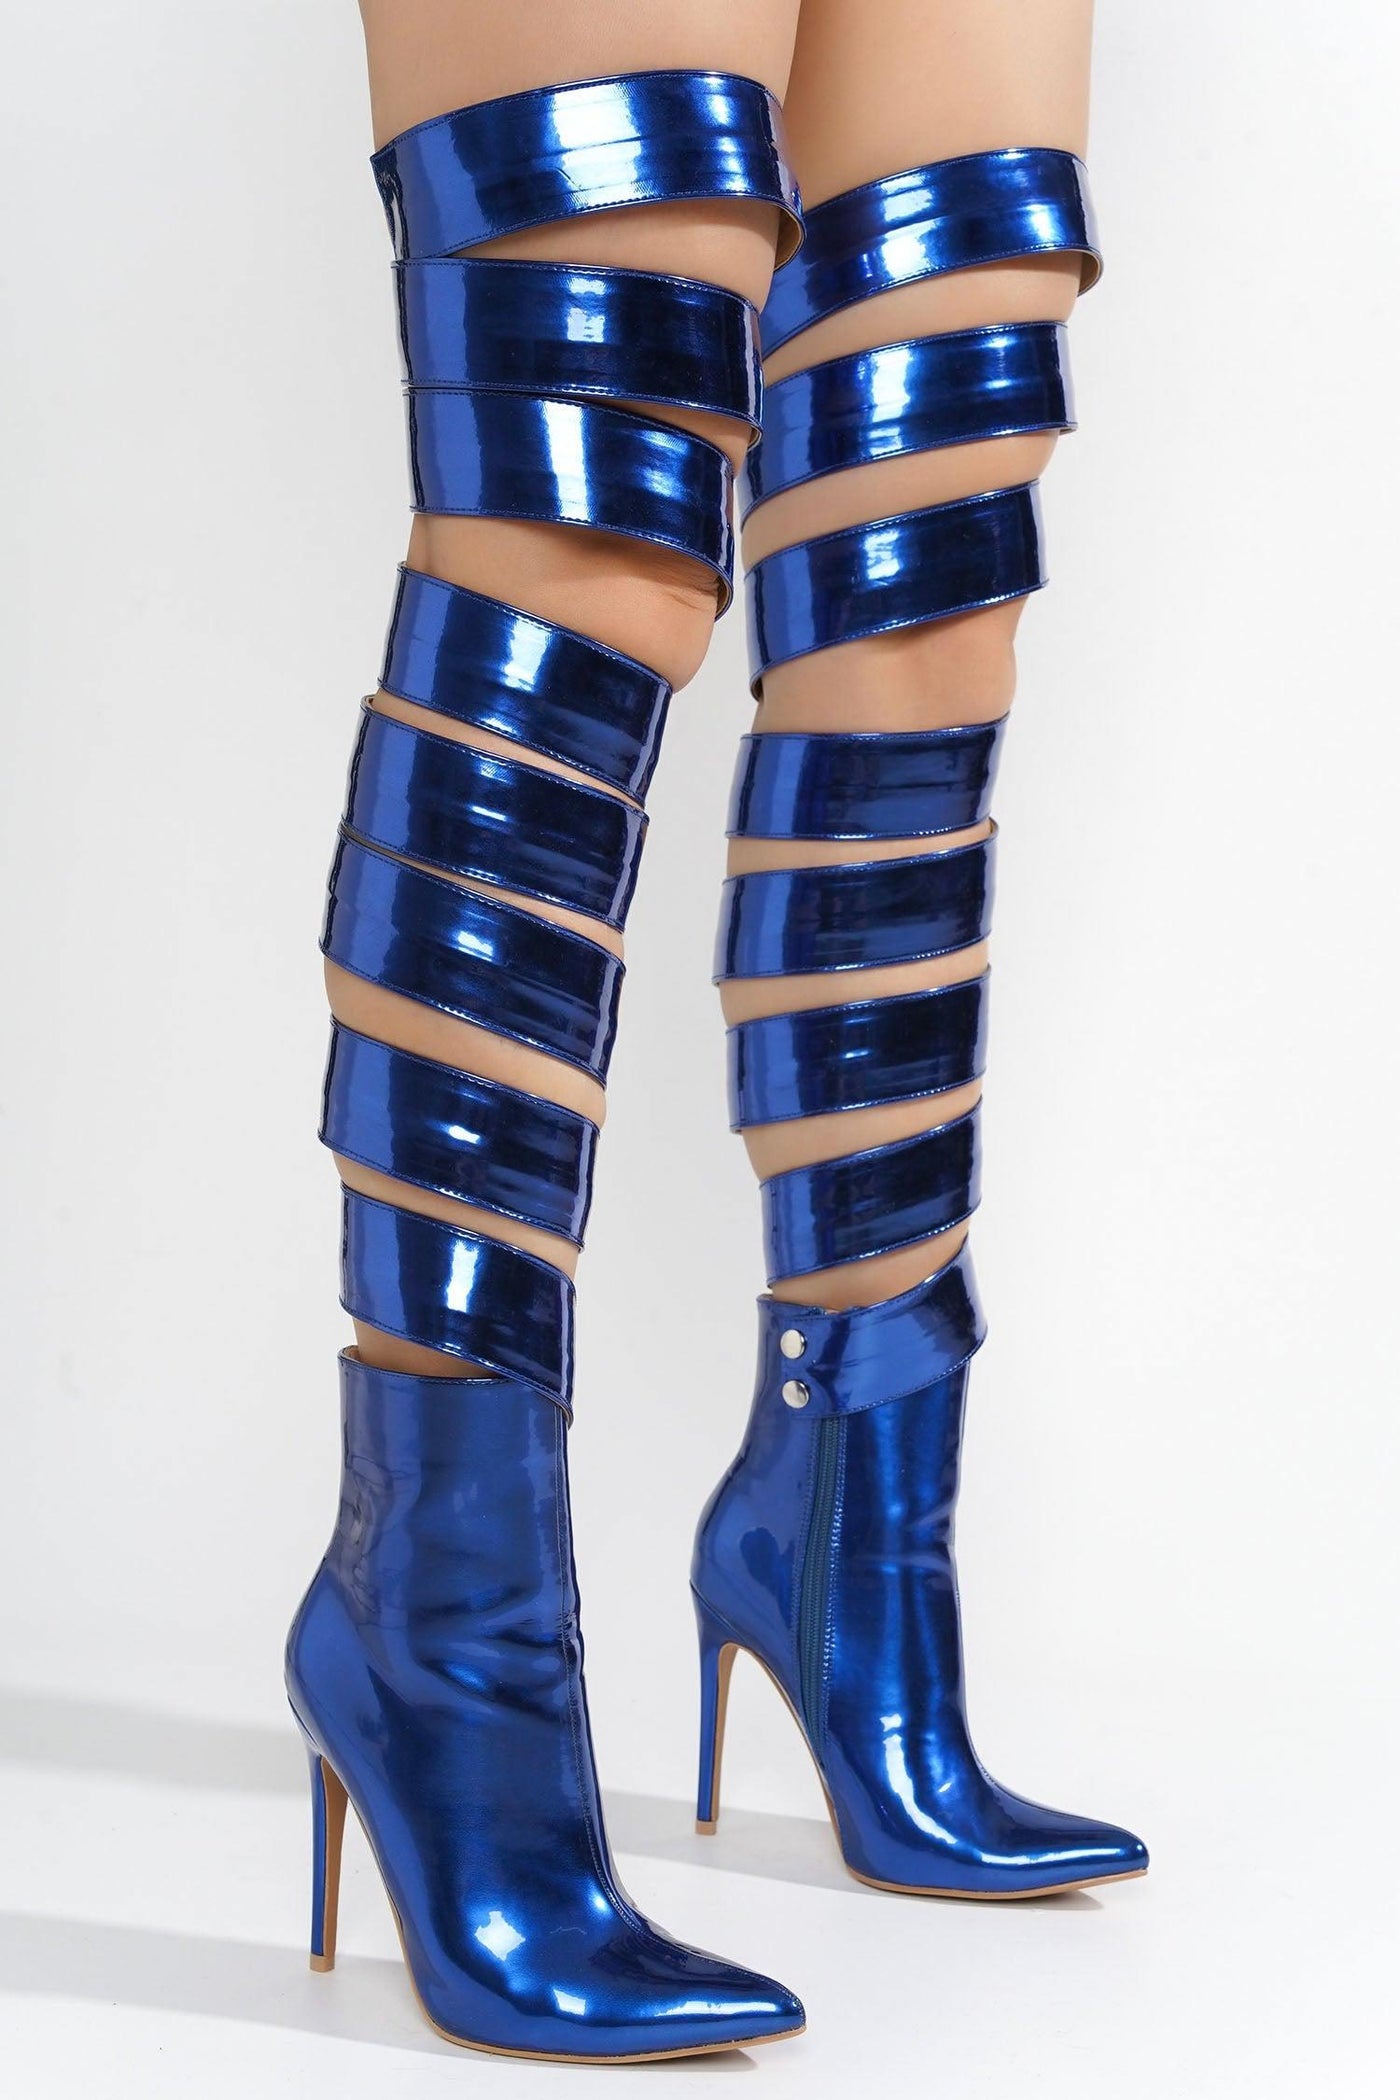 LAPEL - BLUE Thigh High Boots - AMIClubwear